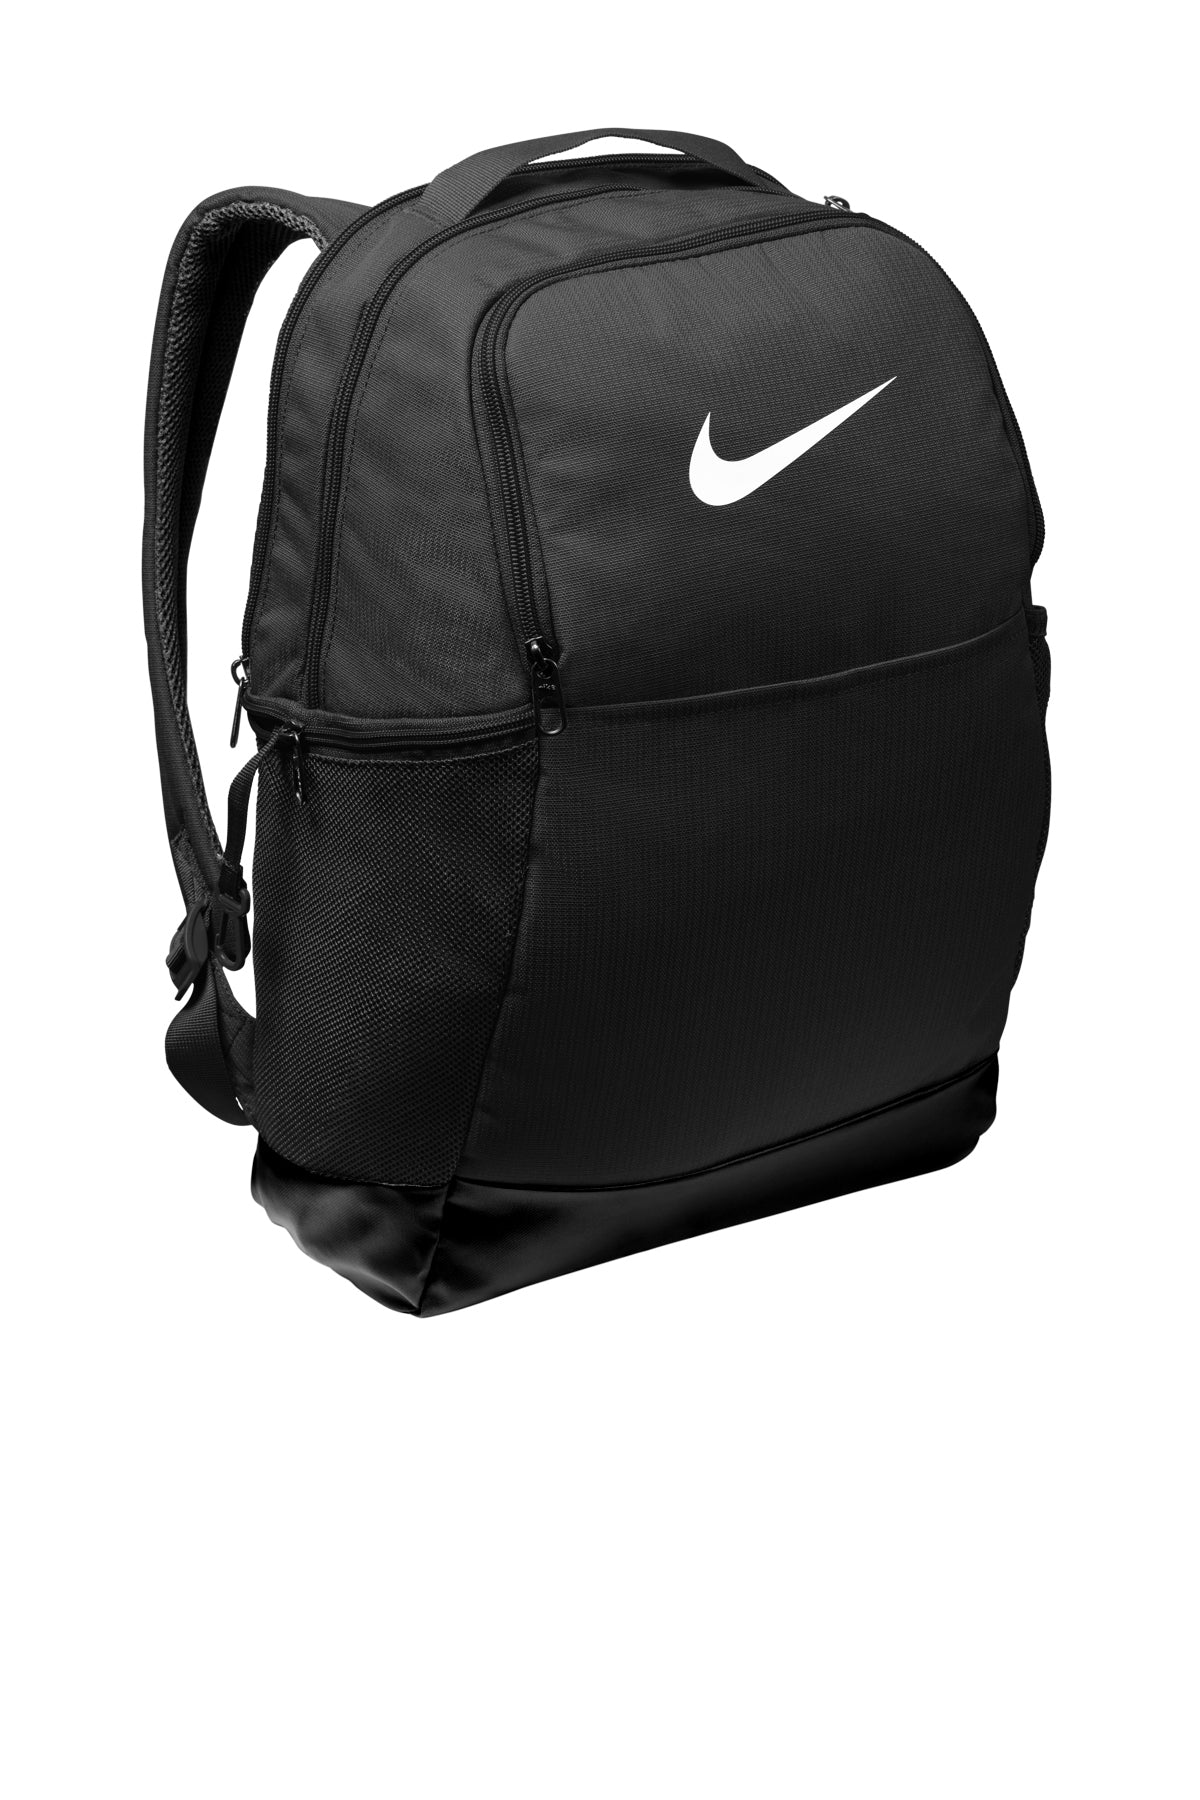 NKDH7709 Nike Brasilia Medium Backpack